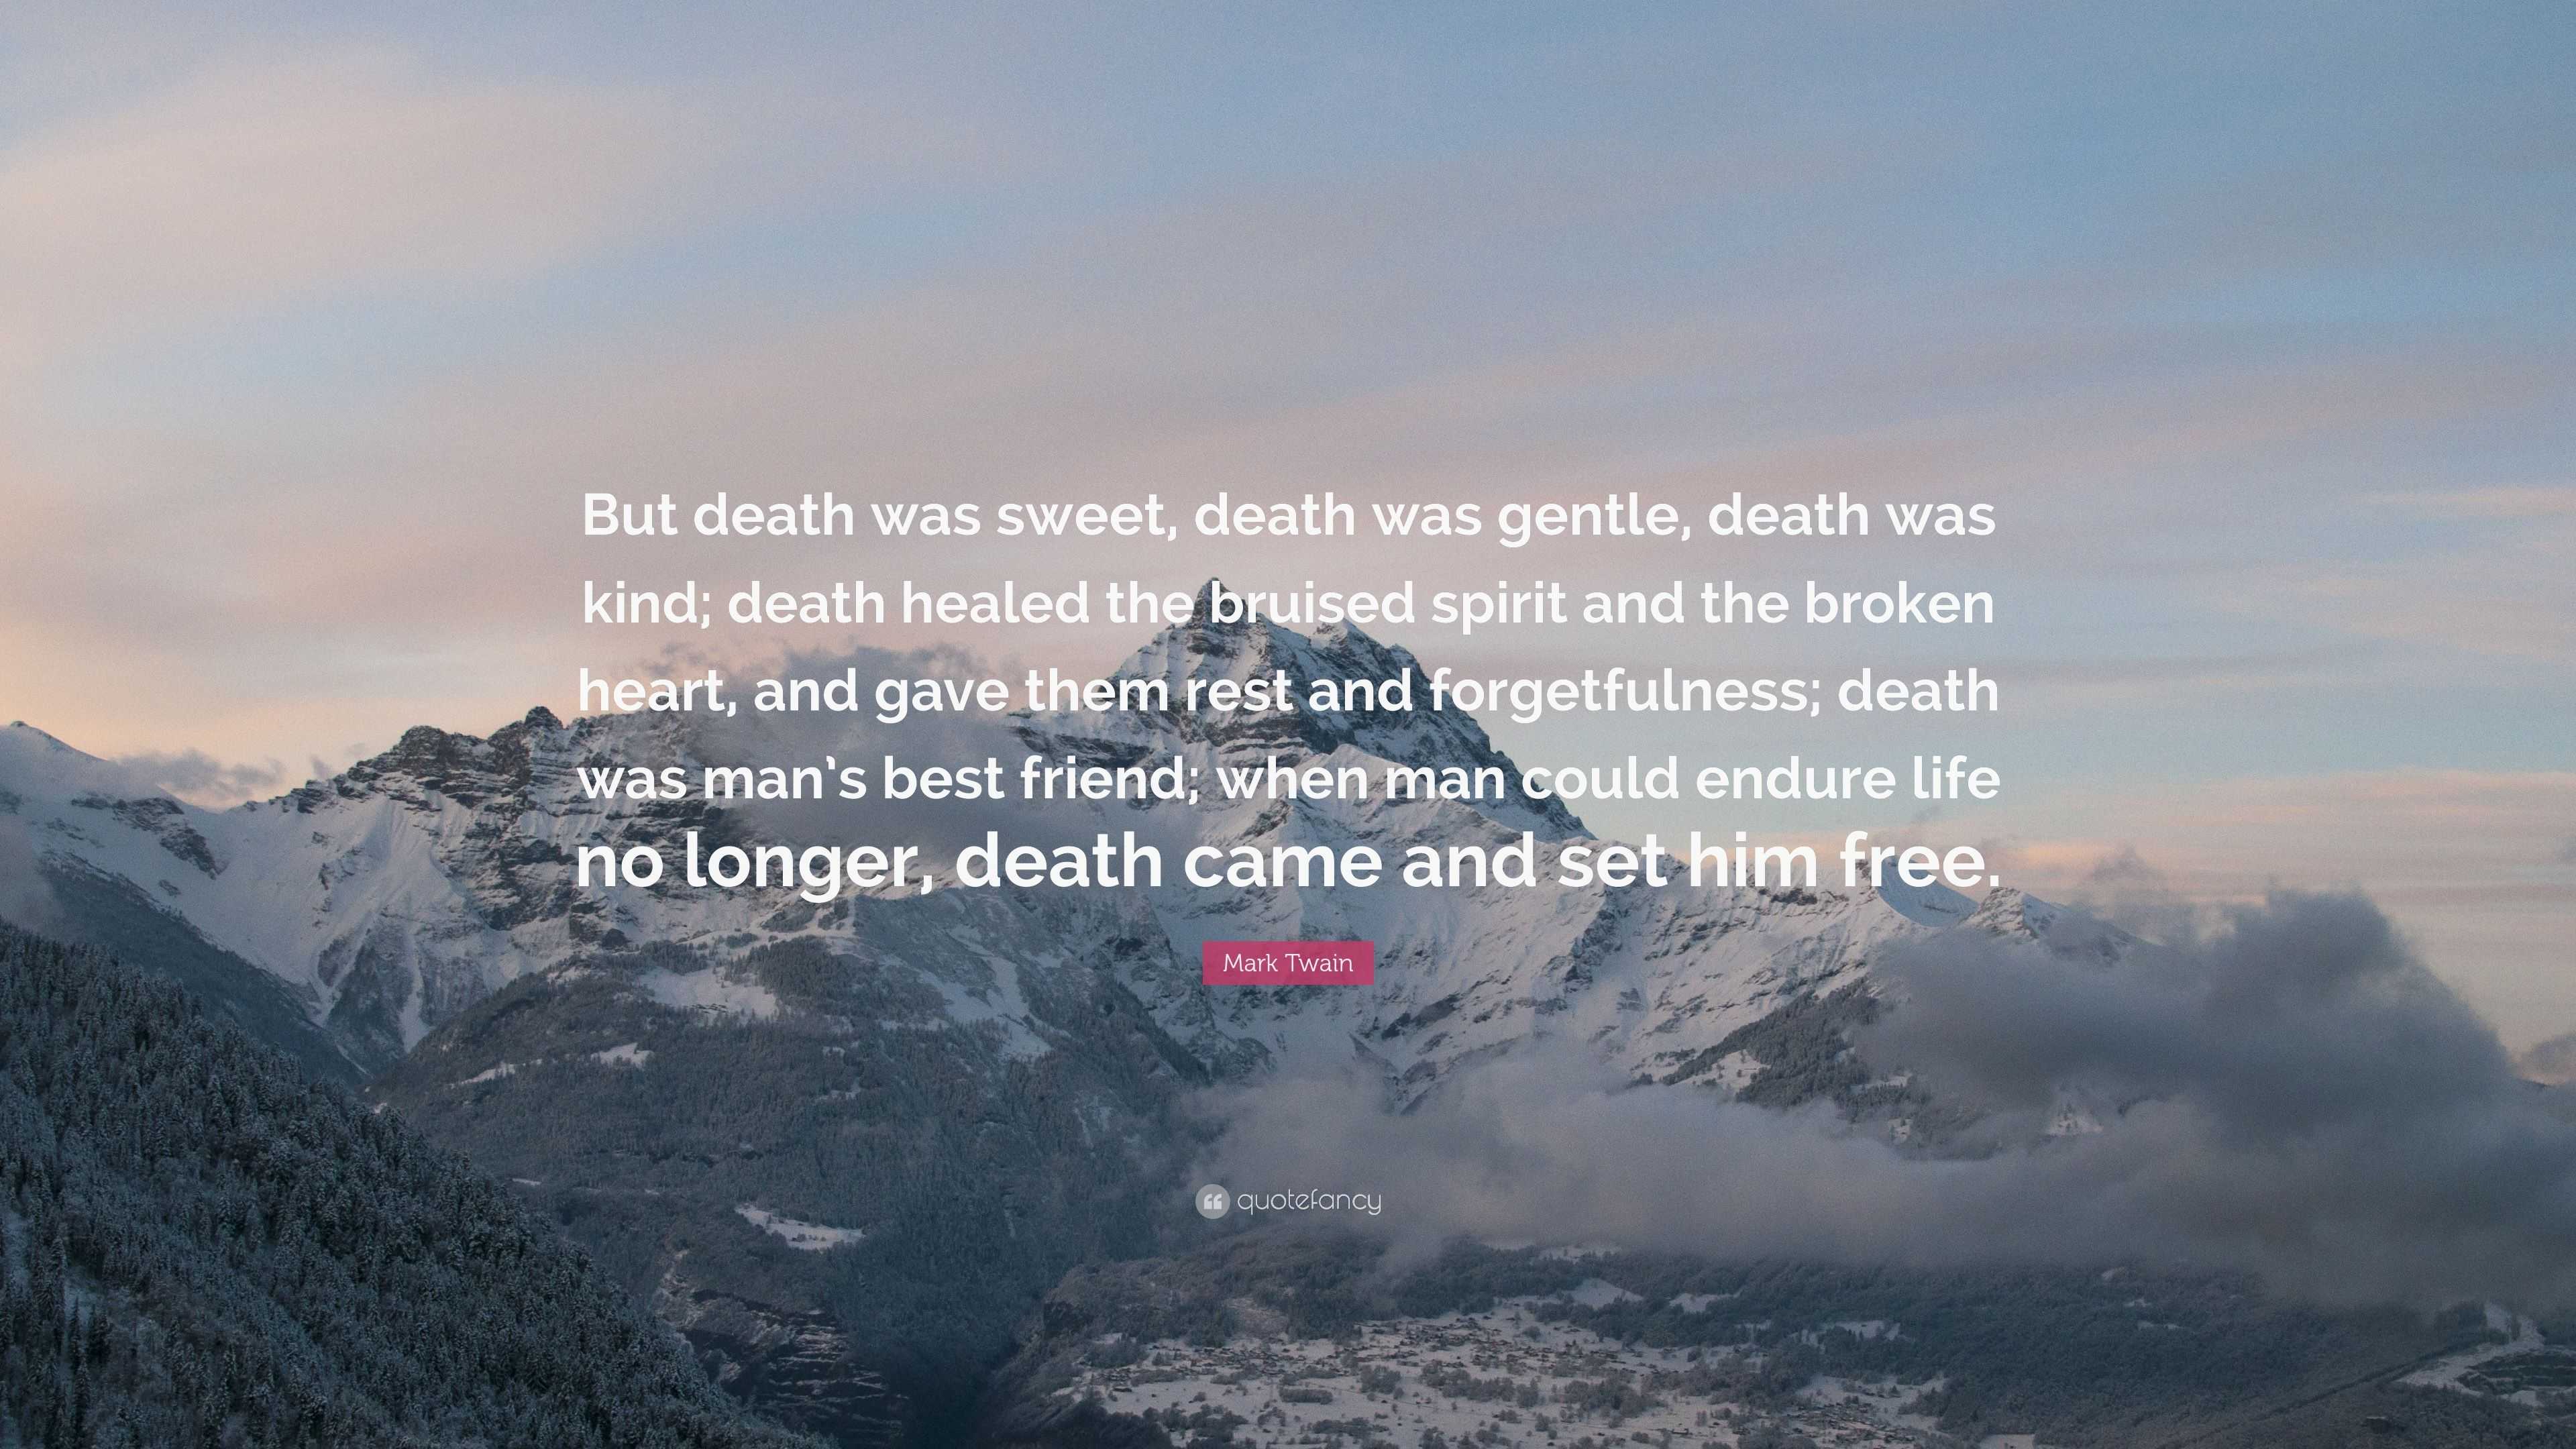 Mark Twain Quote: “But death was sweet, death was gentle, death was ...